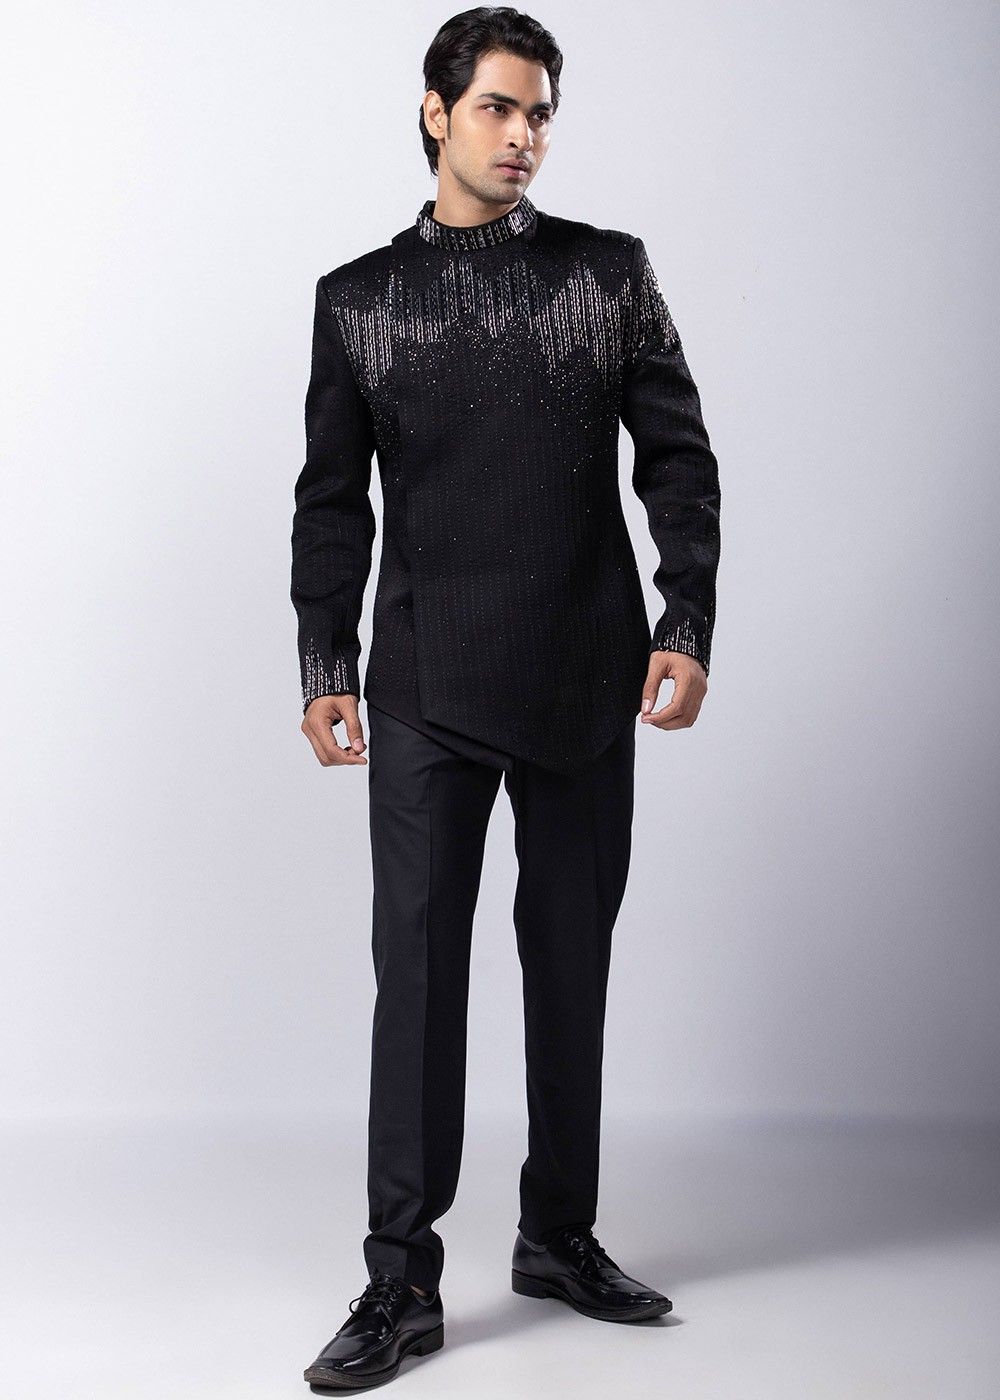 India Black Jodhpuri Suit Bandhgala Suit Indian Wedding Suit Sainly– SAINLY